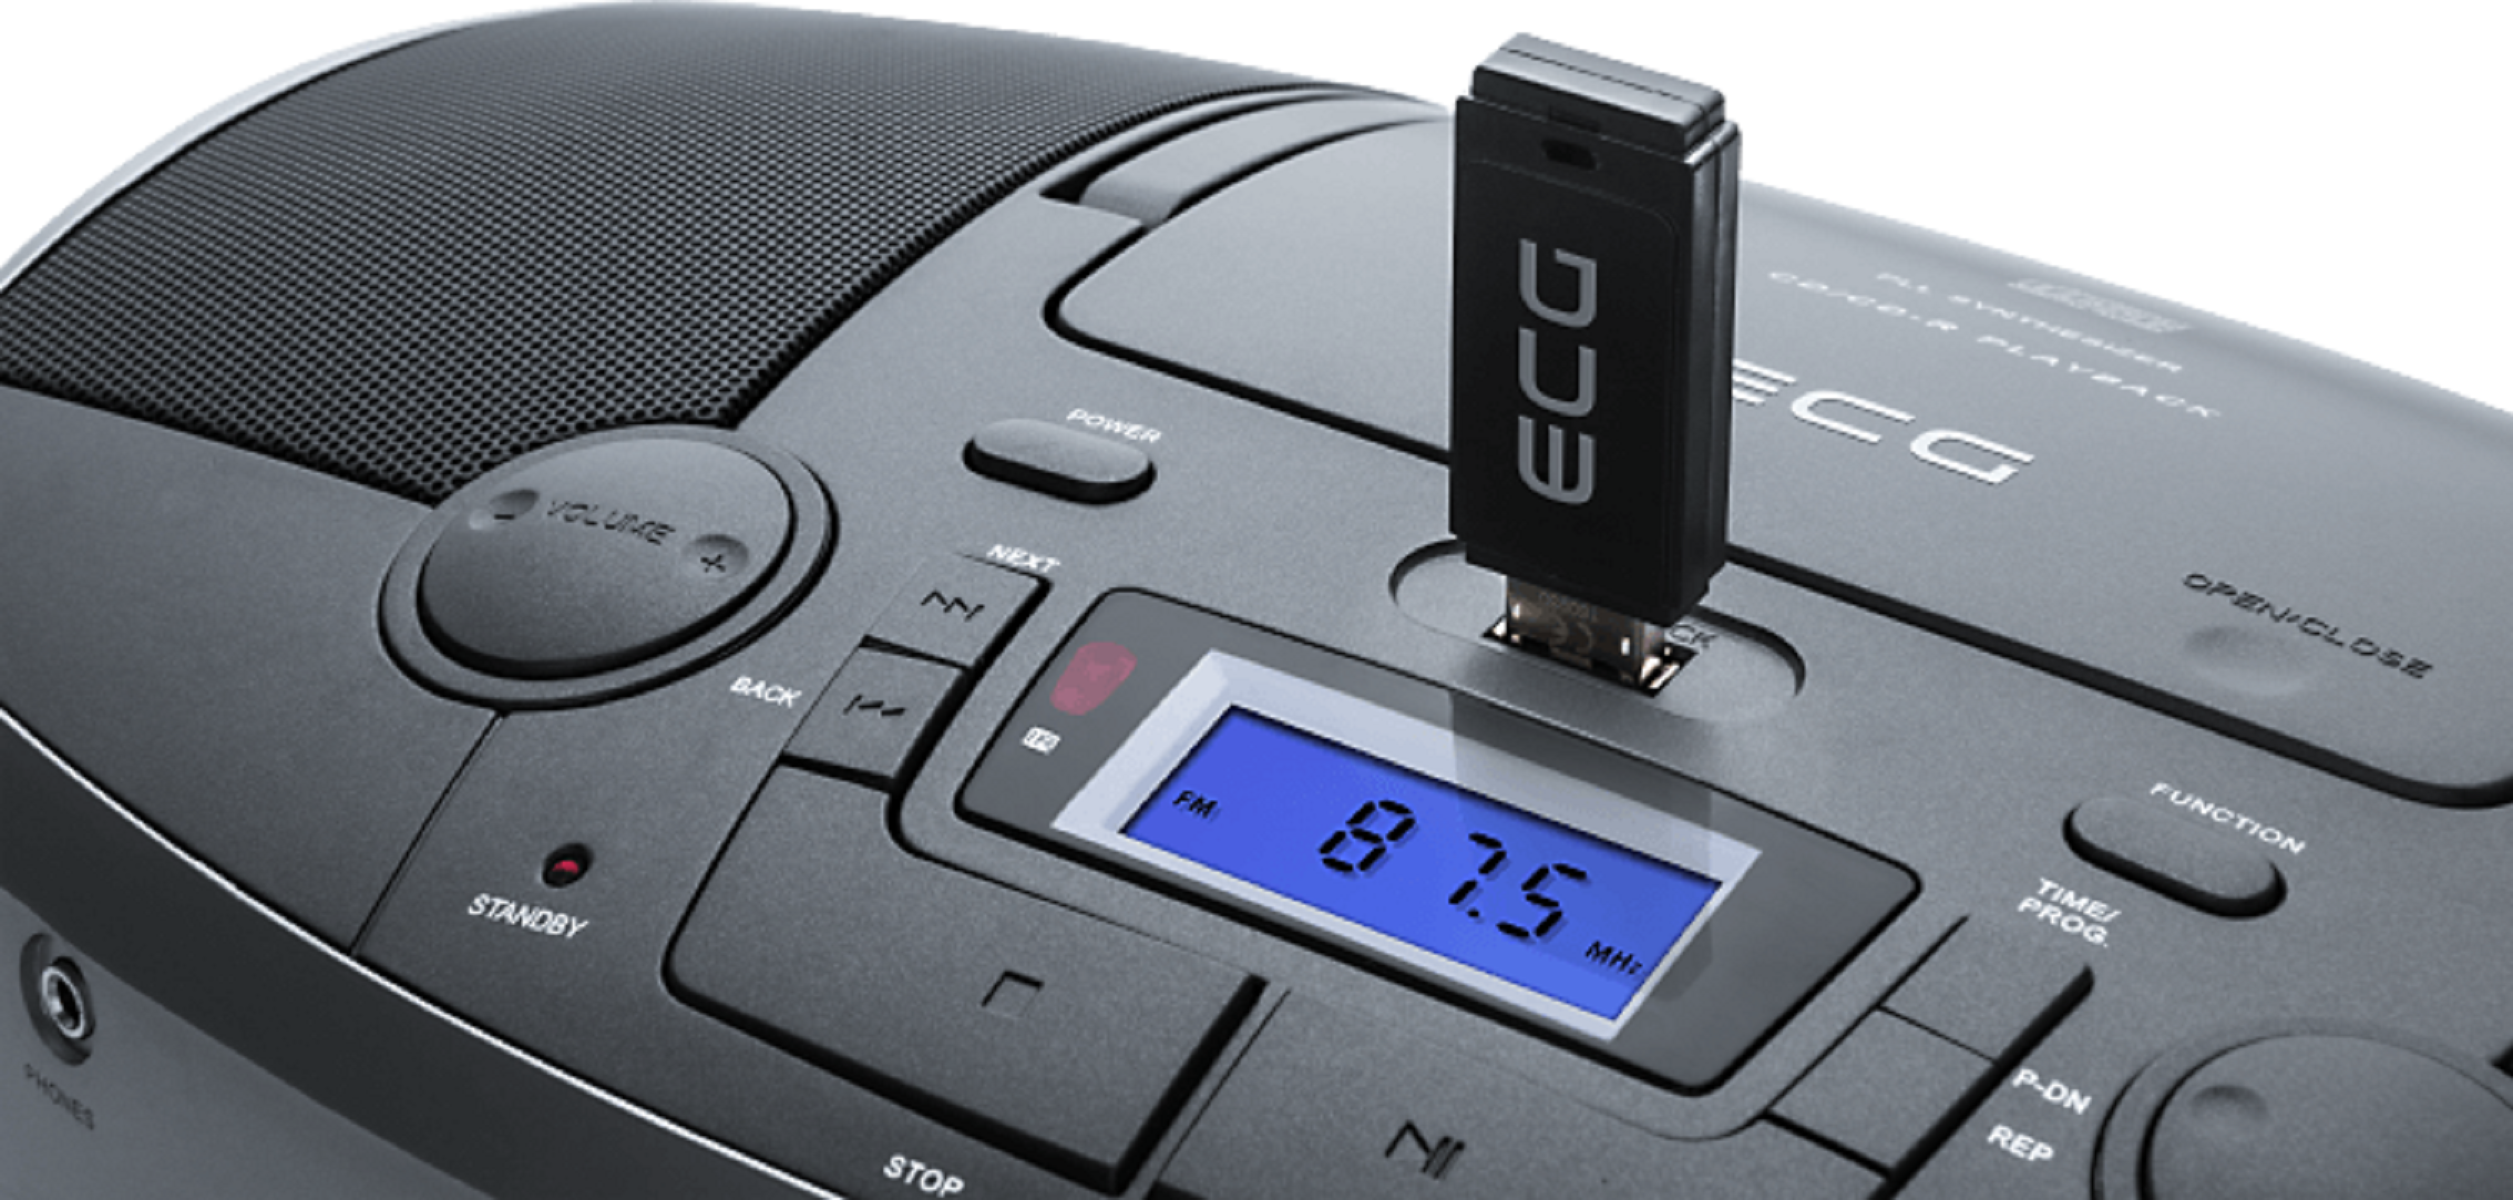 ECG CDR 1000 U | | Radio CD-Radio | | MP3 | Titan CD-R/RW, Titan mit AUX USB CD, Fernbedienung | | mit USB CD-Player